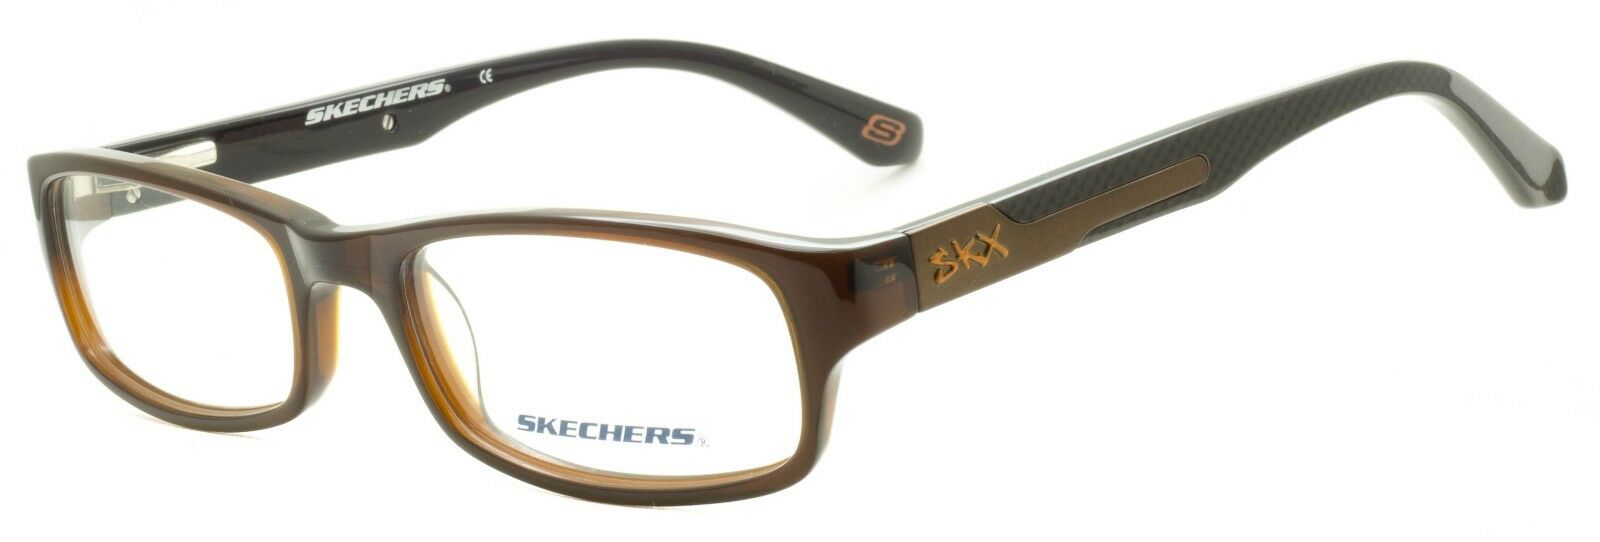 gennembore Tragisk Solskoldning SKECHERS SE 1061 D96 Eyewear FRAMES RX Optical Glasses Eyeglasses BNIB -  TRUSTED - GGV Eyewear